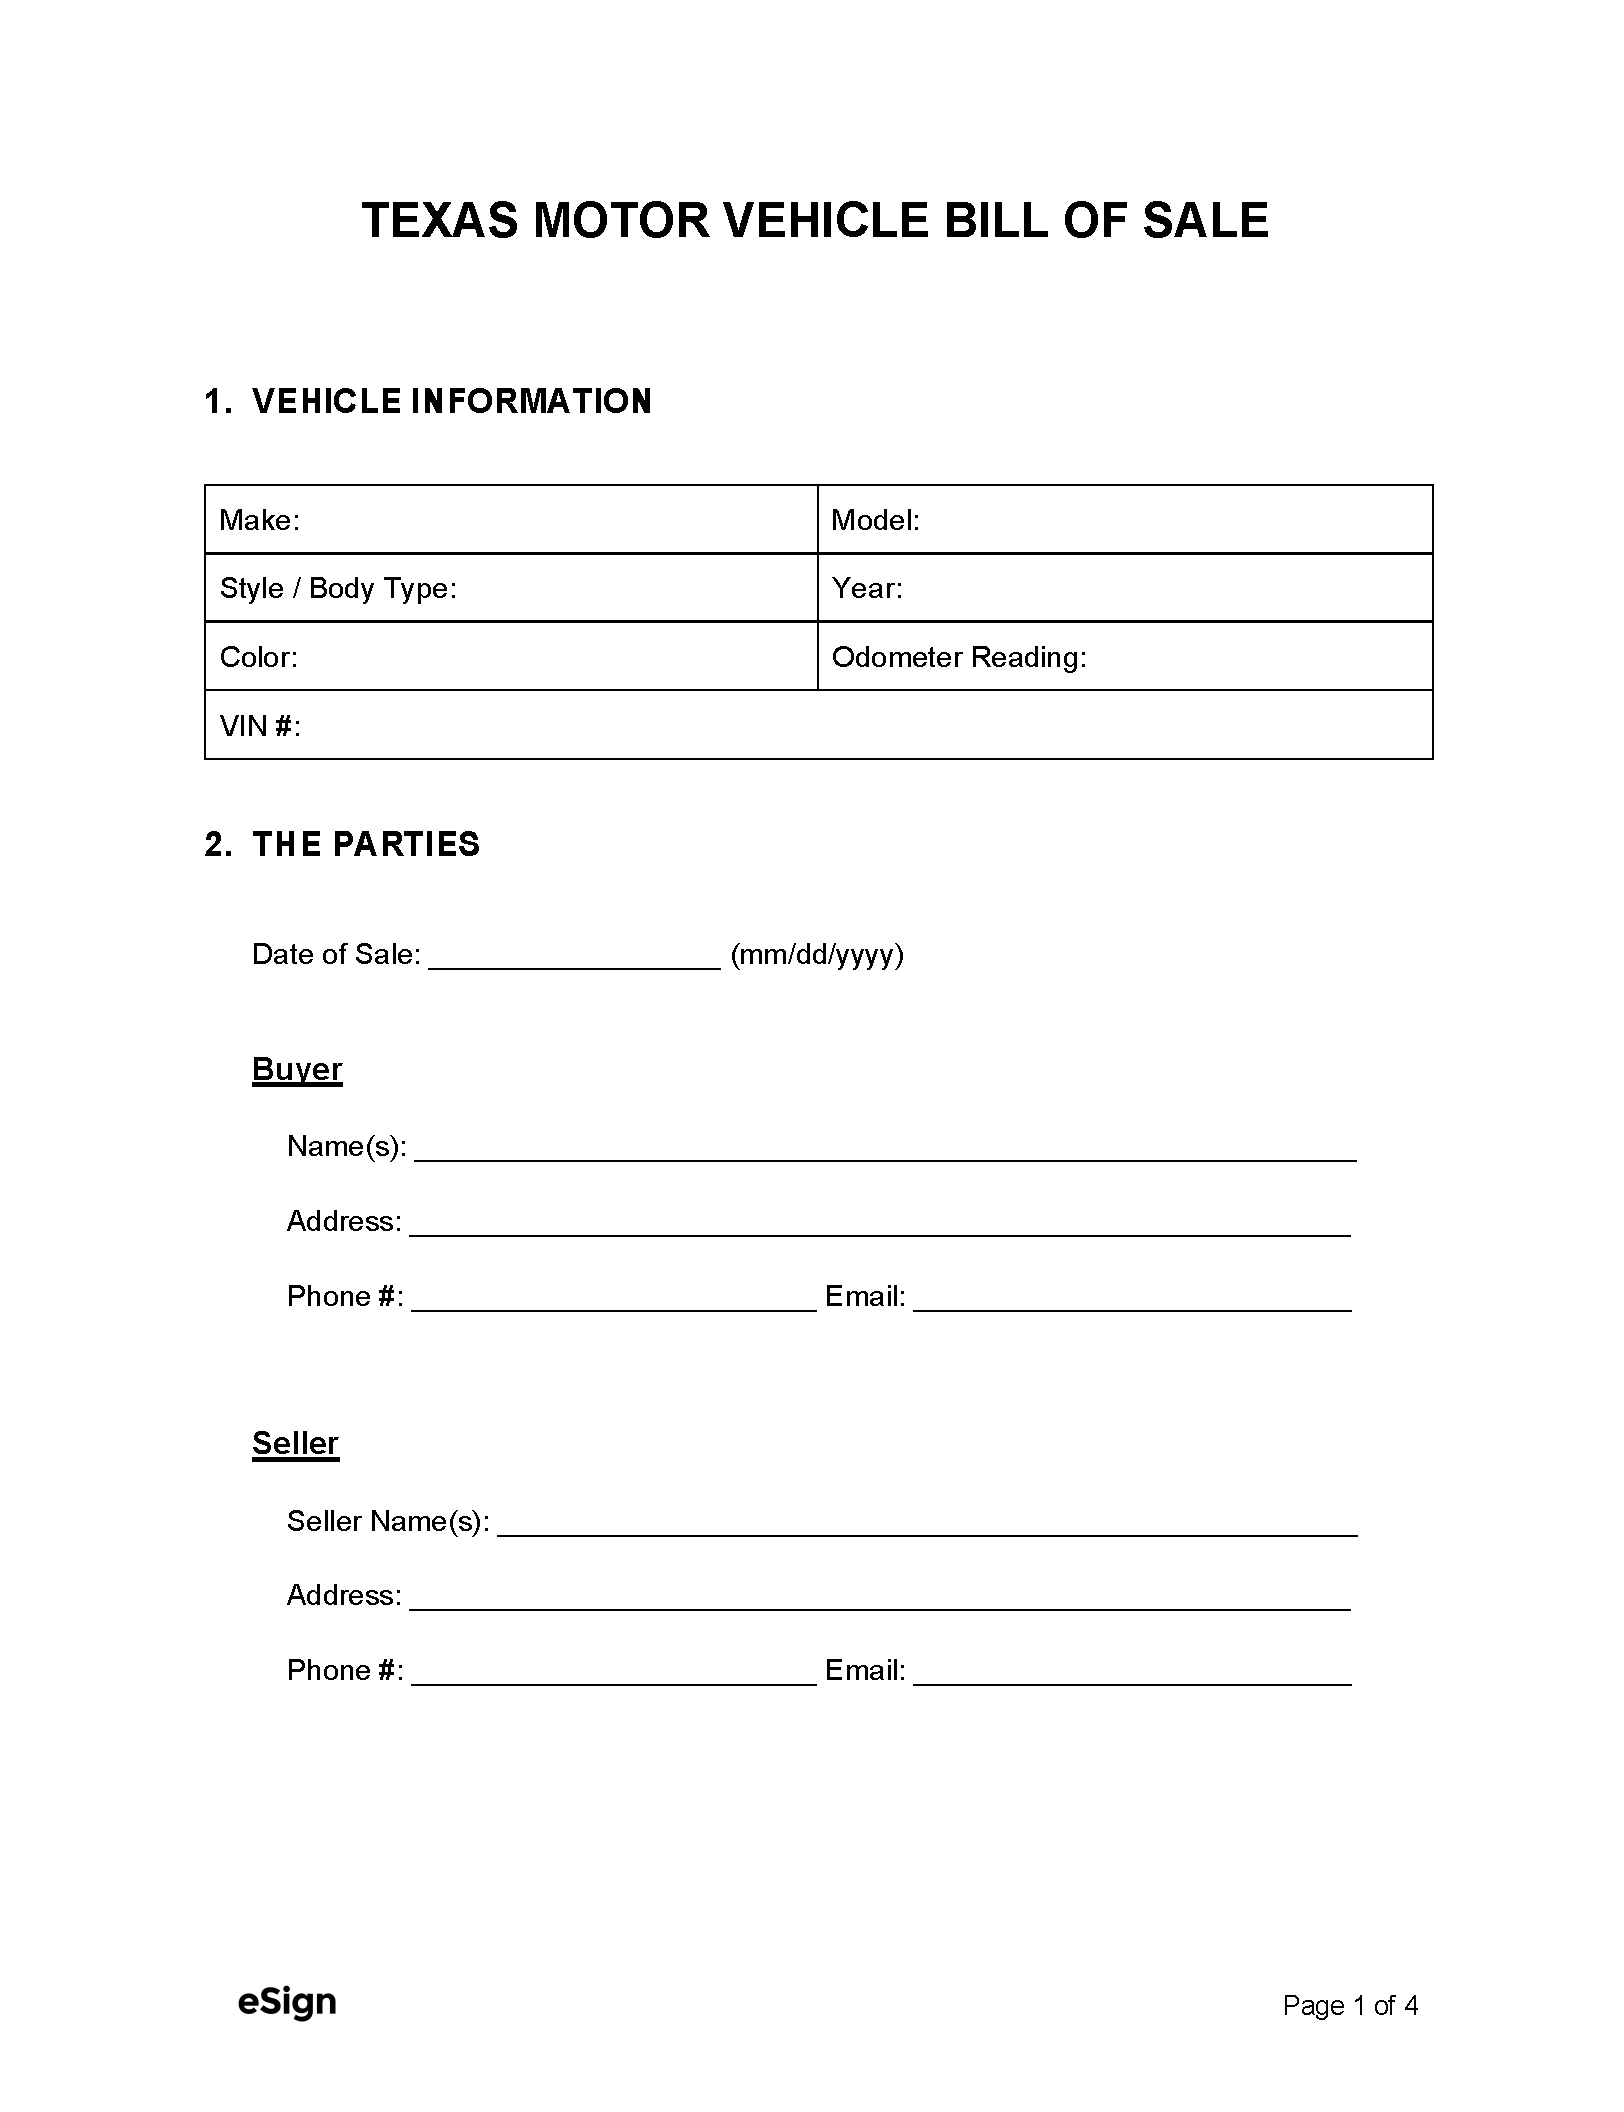 Free Texas Motor Vehicle Bill of Sale Form - PDF  Word